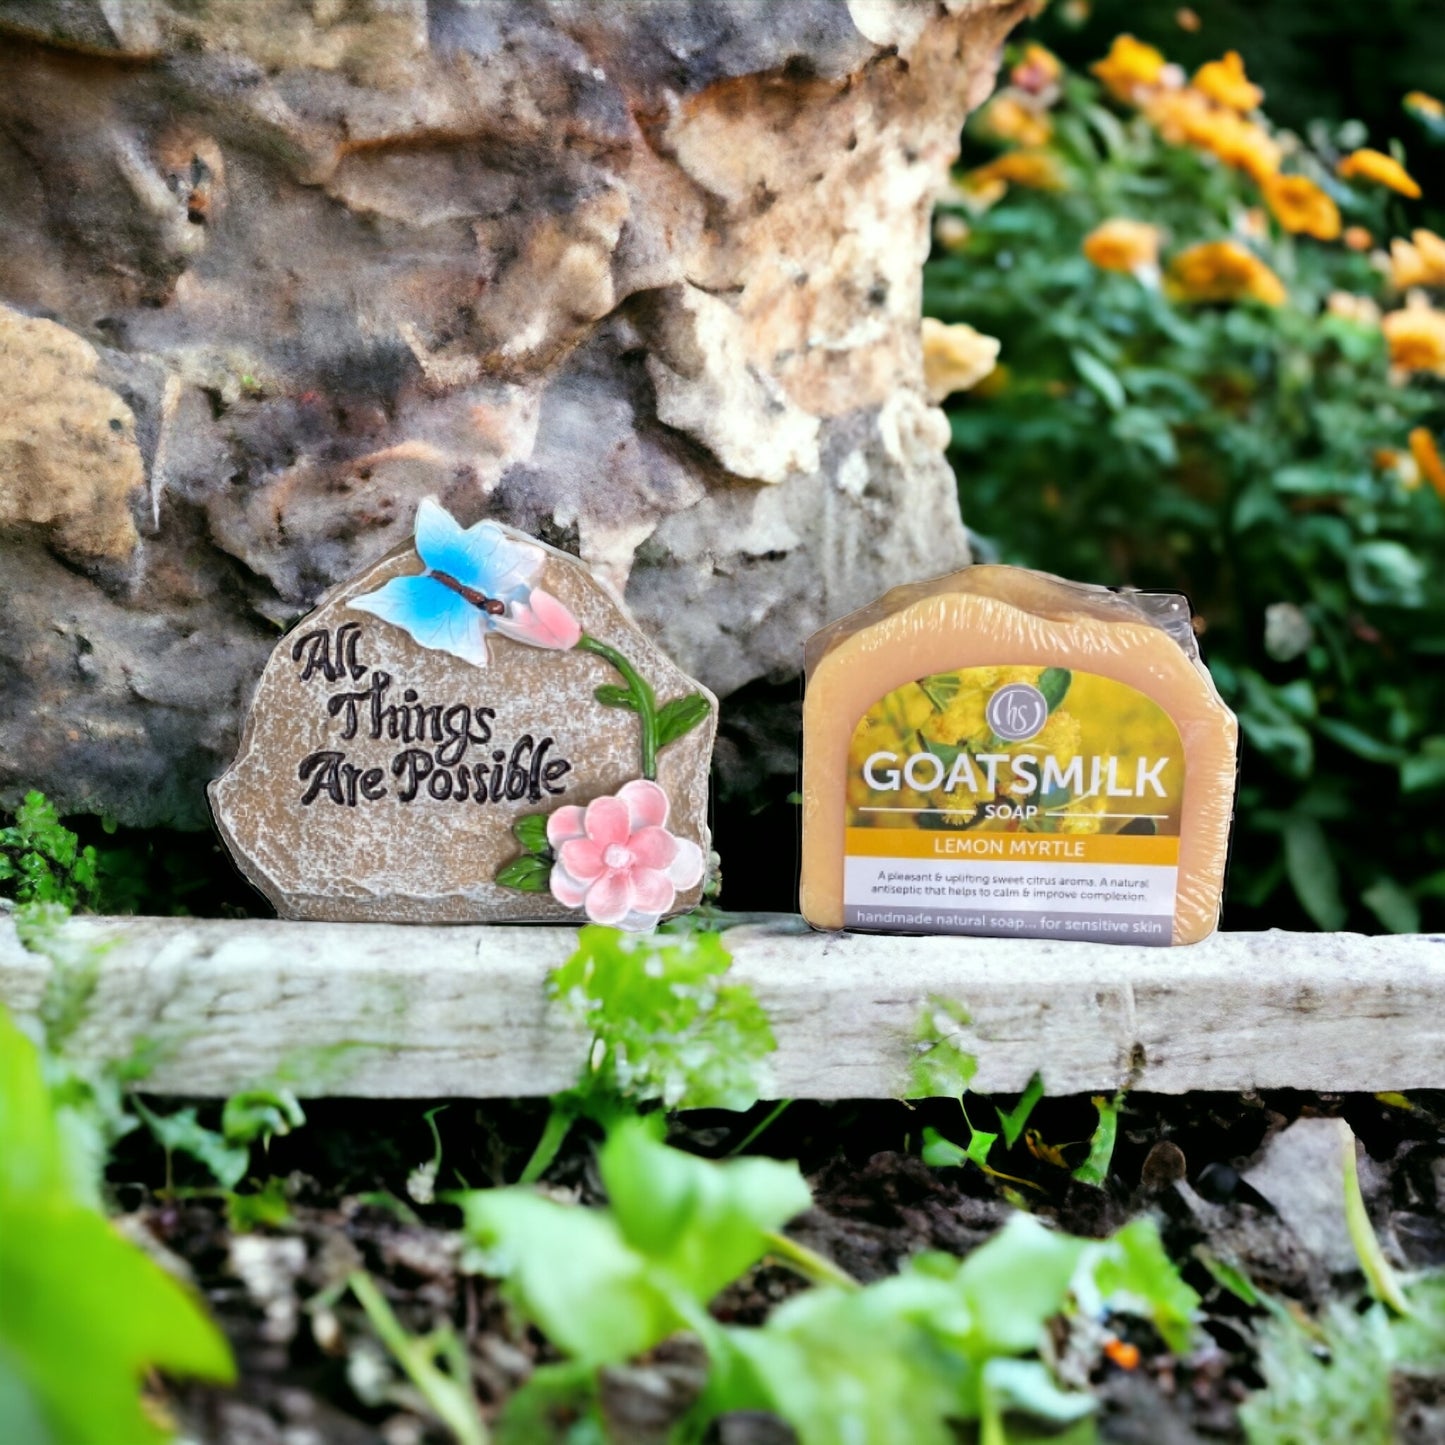 Garden Possible Gardener Stone Goatmilk Soap Gift - The Renmy Store Homewares & Gifts 